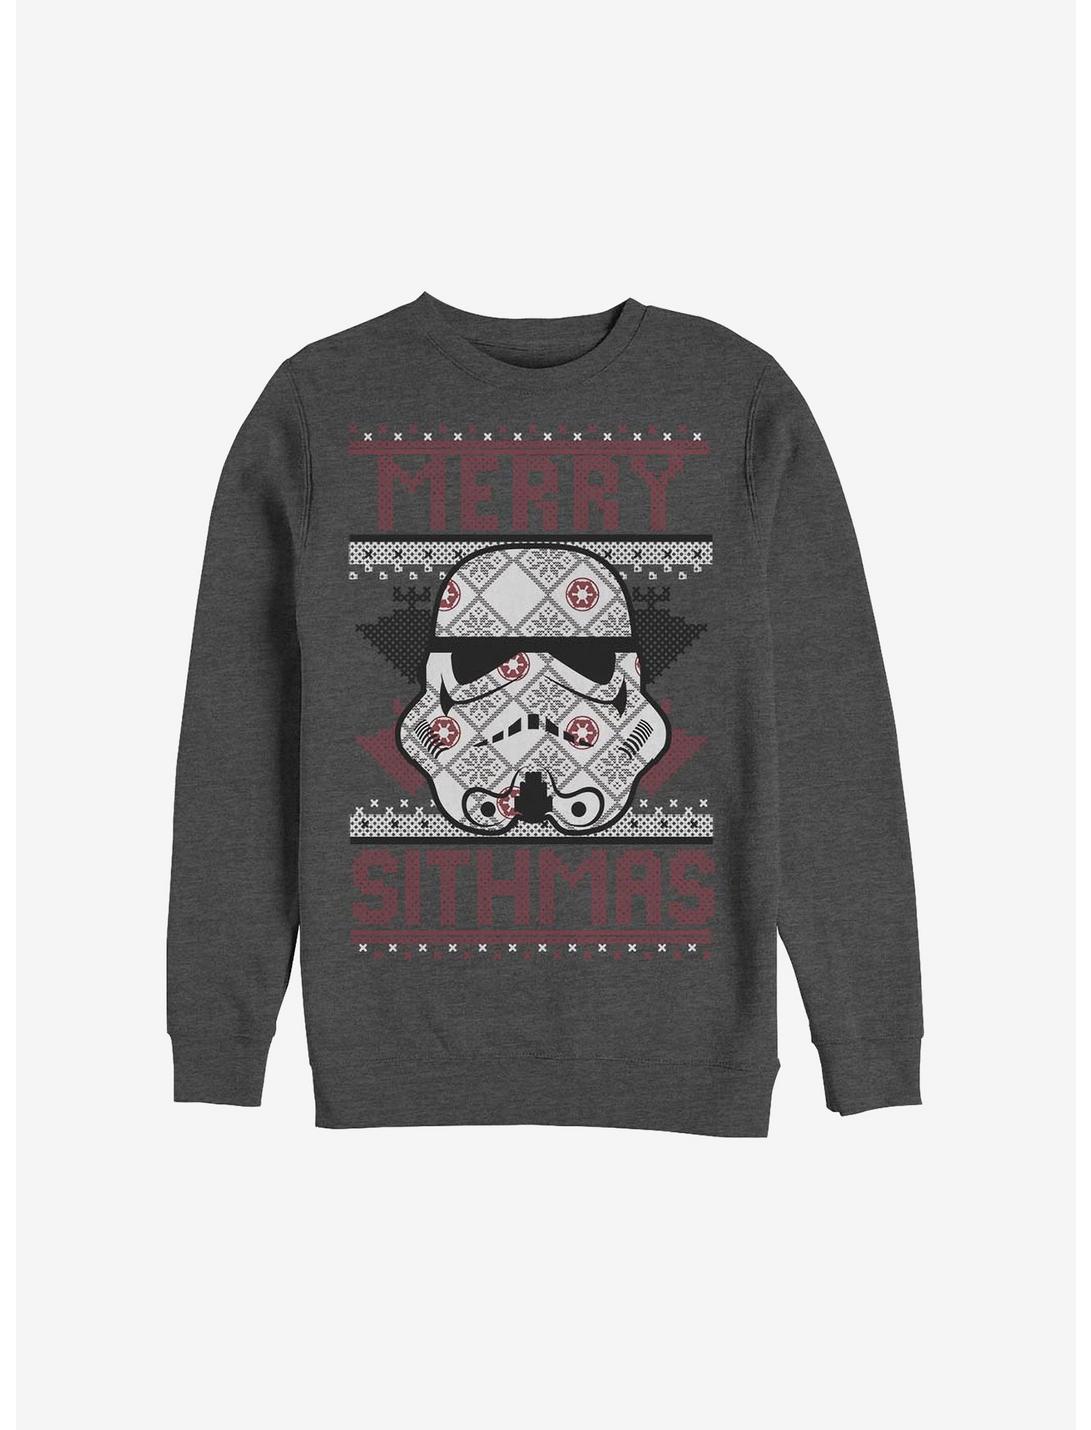 Star Wars Merry Sithmas Ugly Christmas Sweater Sweatshirt, CHAR HTR, hi-res